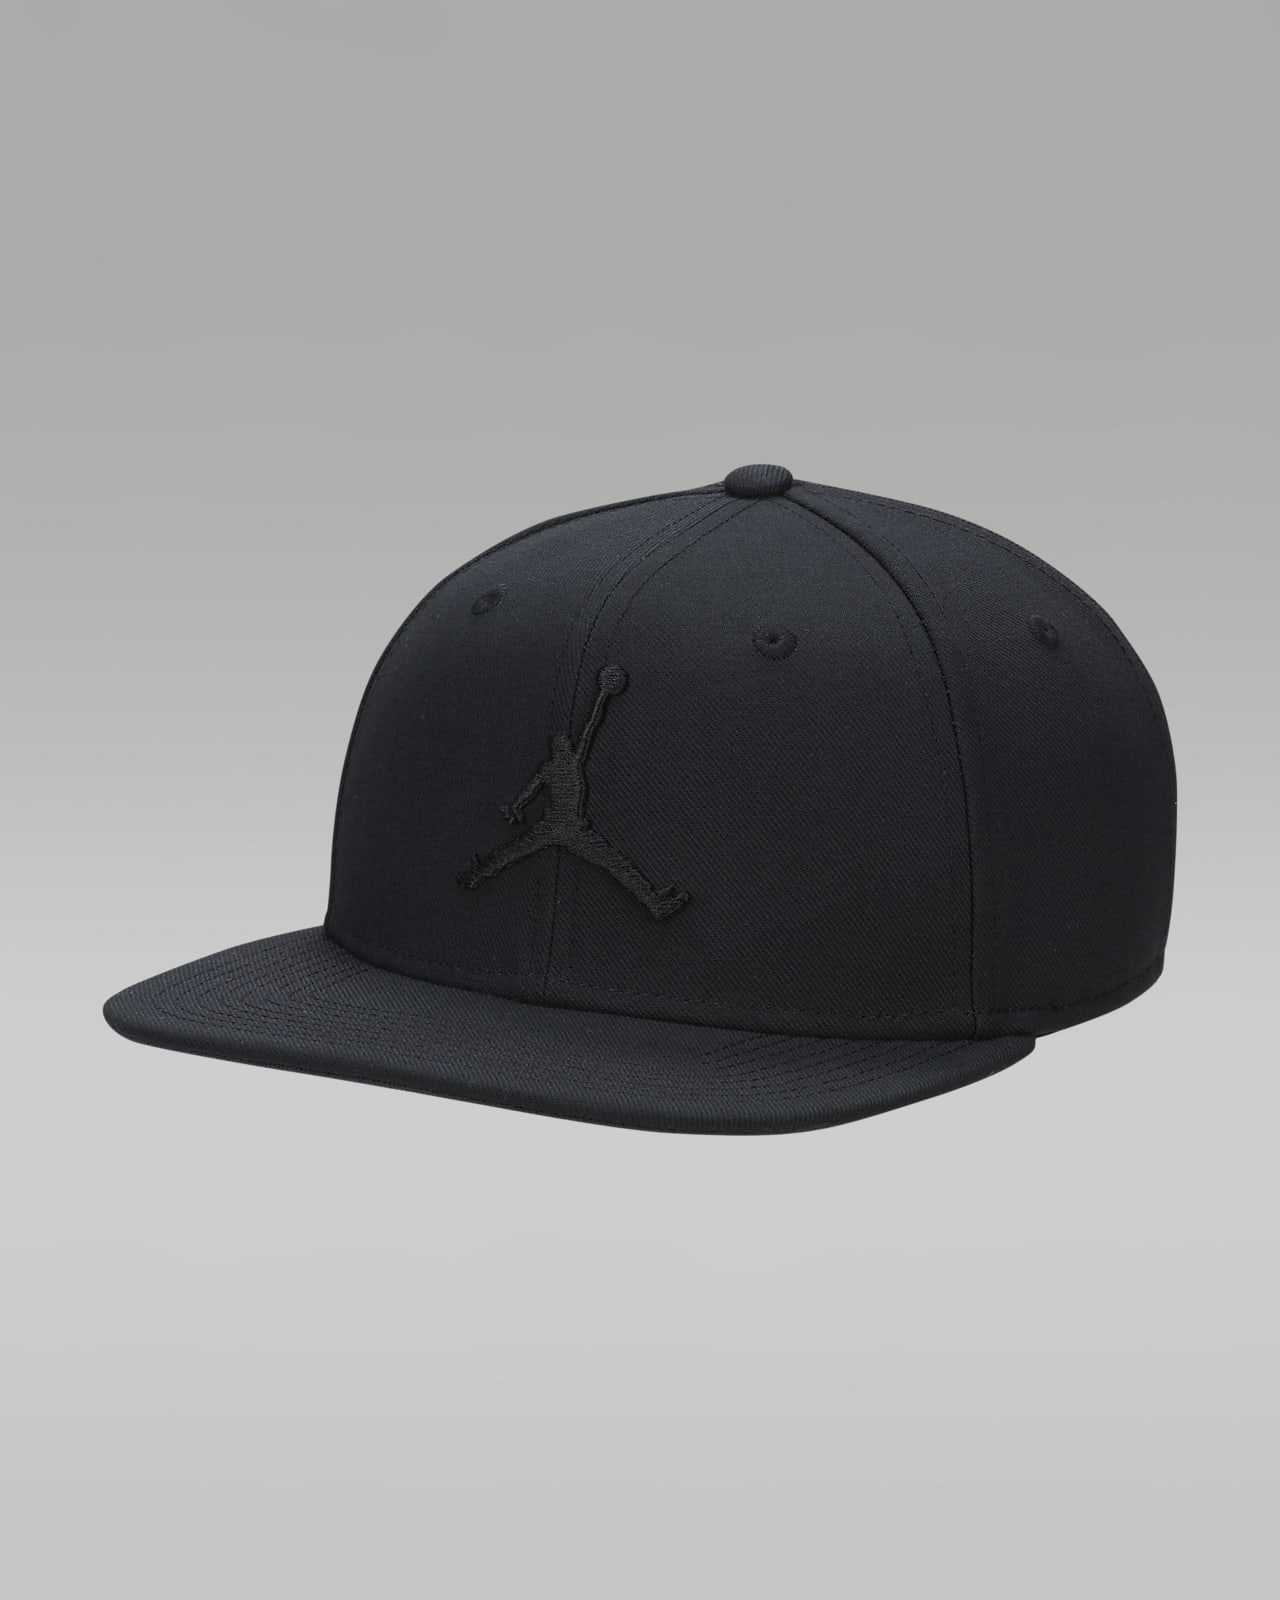 Jordan Pro Cap Adjustable Hat